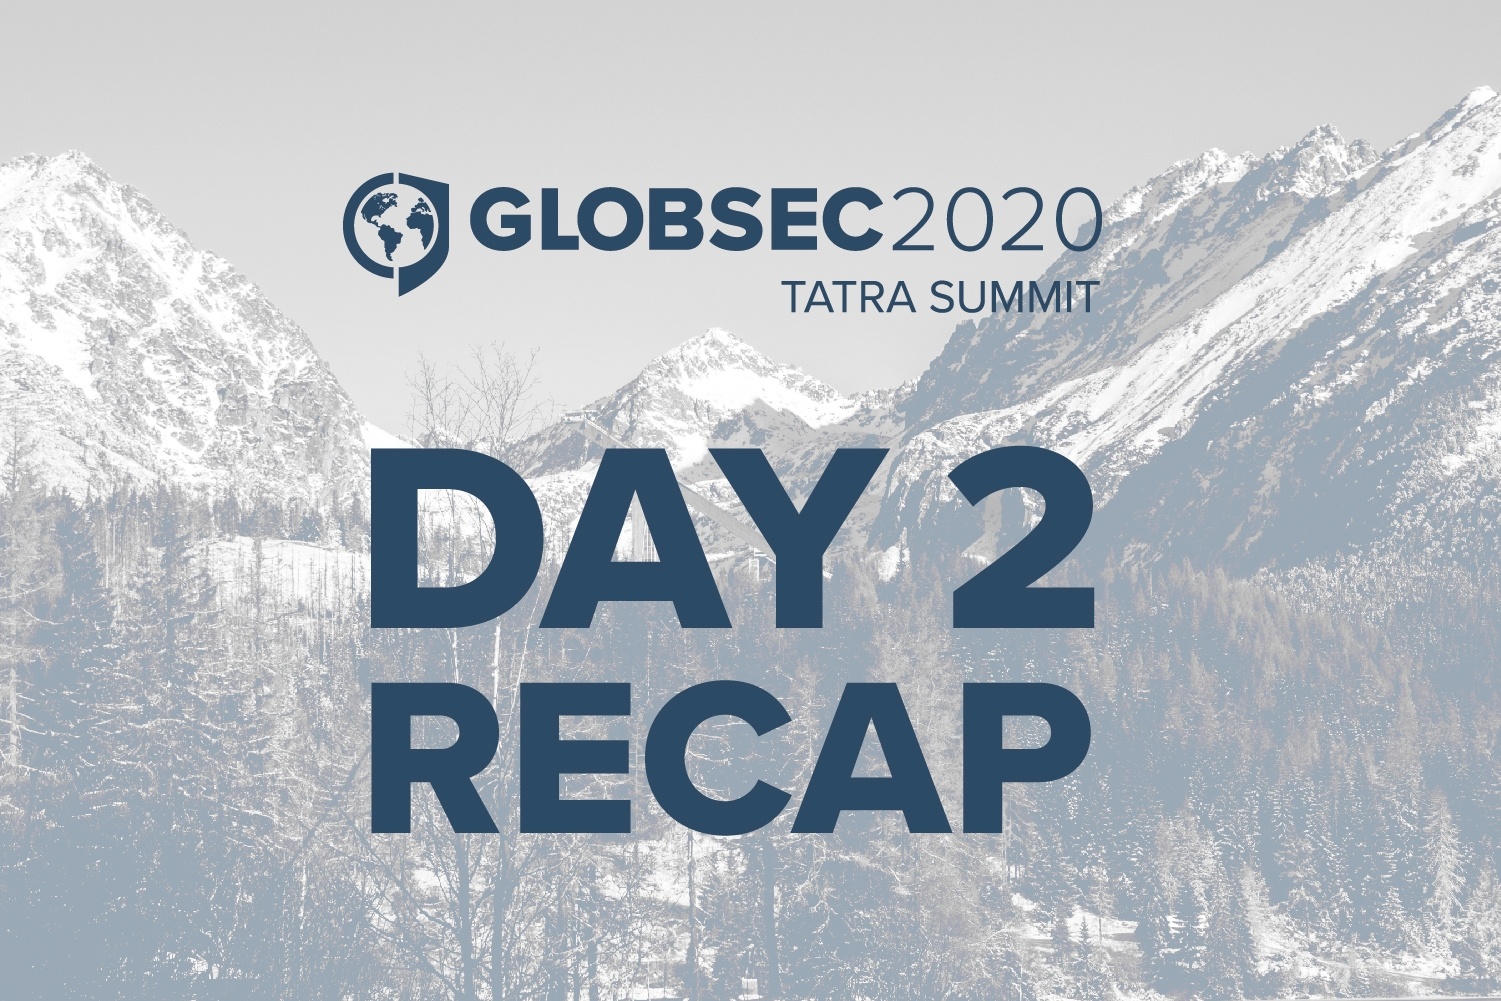 Tatra Summit 2020: Day 2 Recap